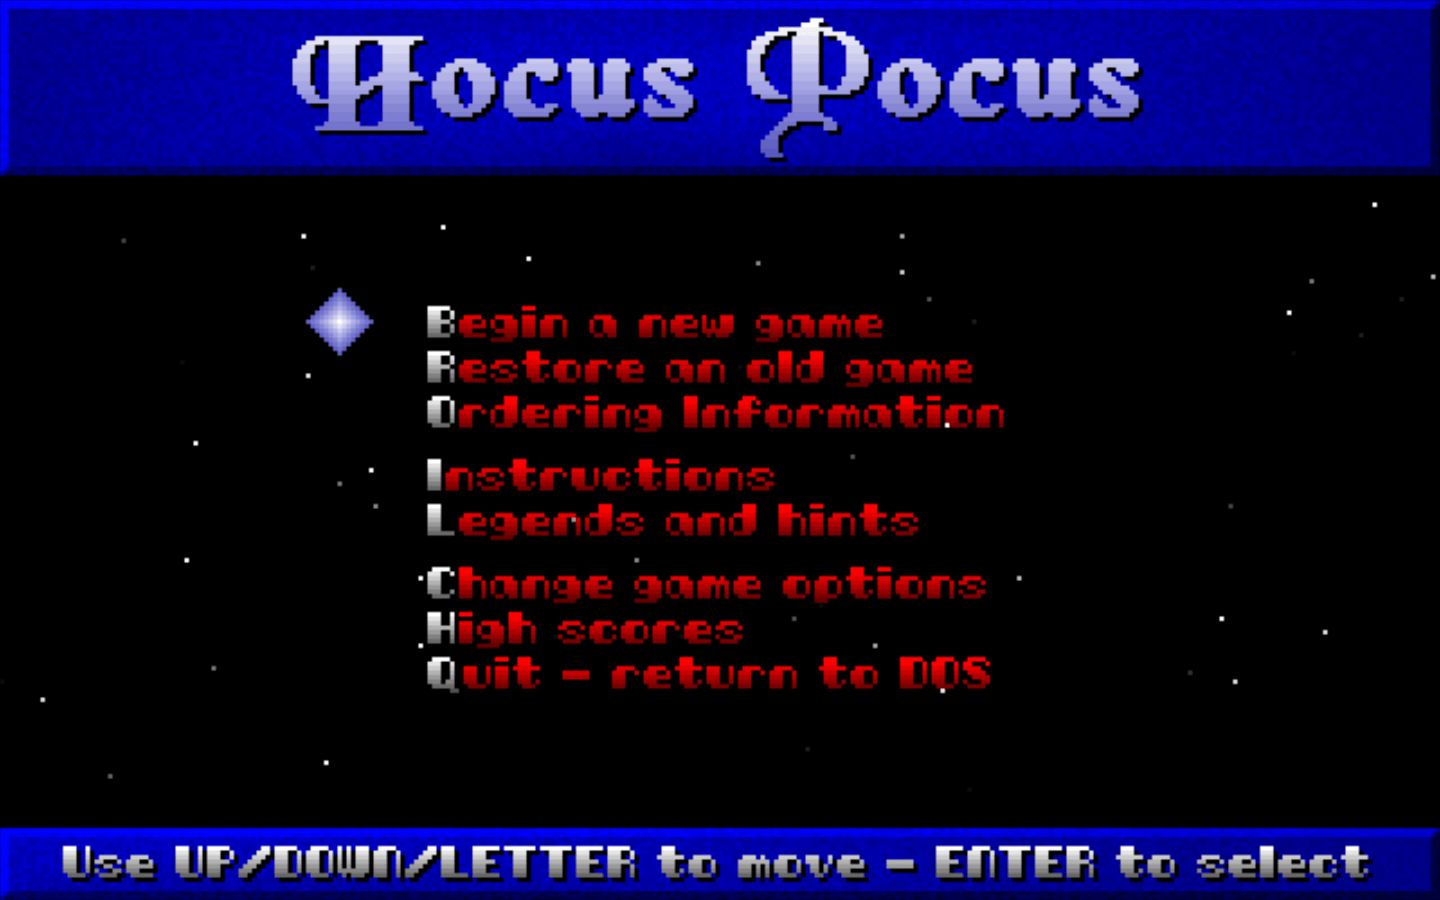 趣怪小巫师 for Mac v1.1(33927)  Hocus Pocus 英文原生版 苹果电脑